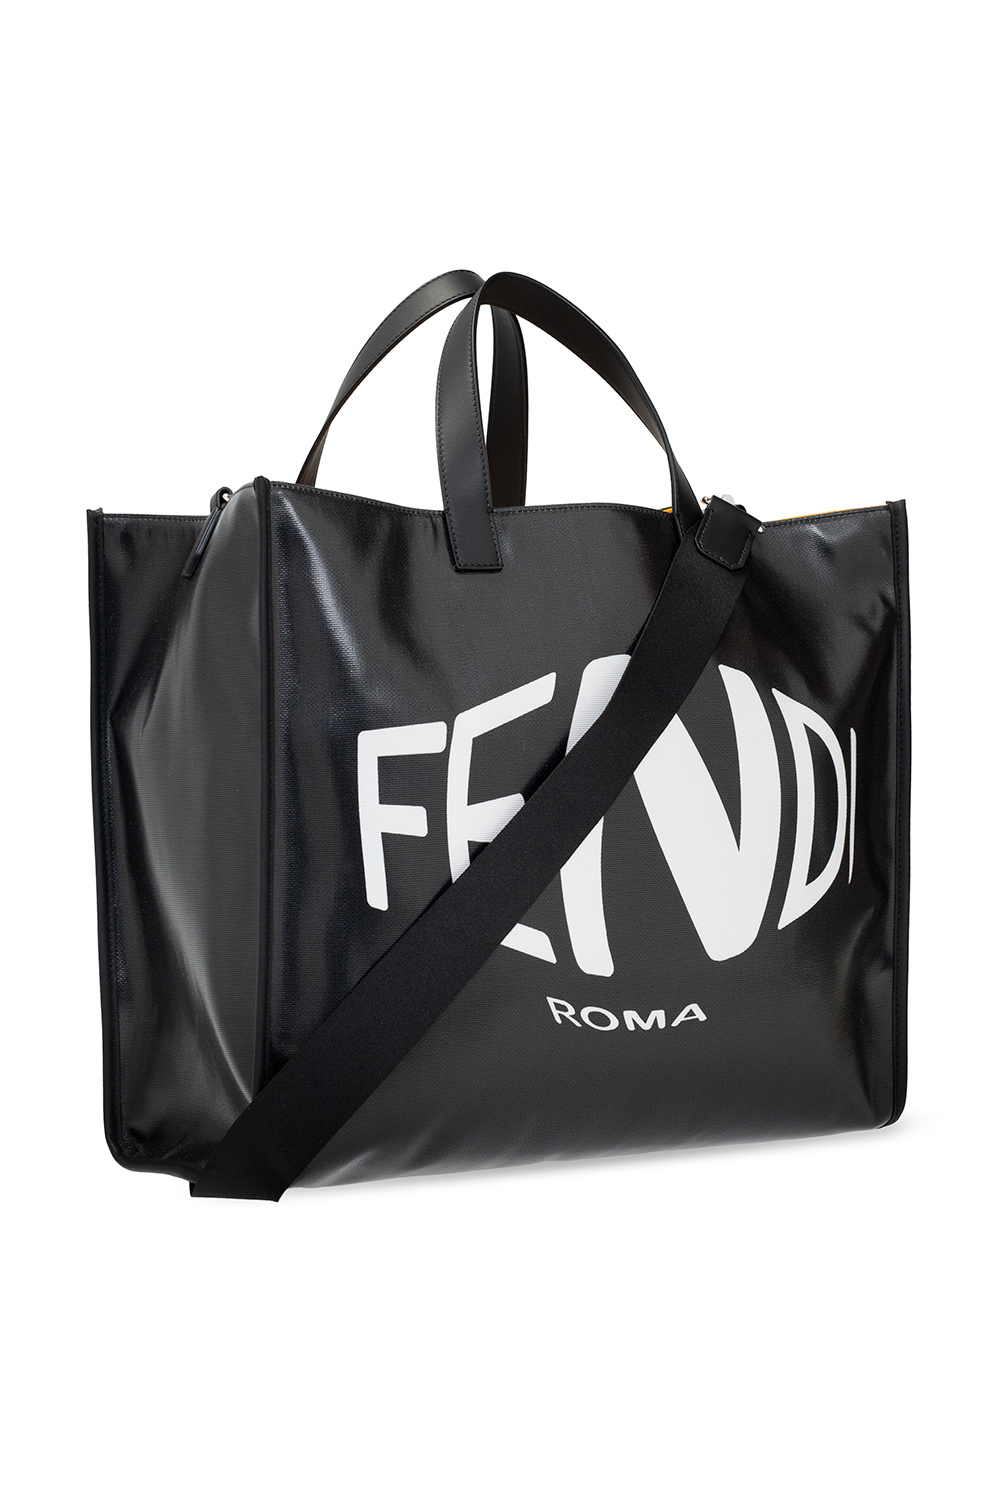 Fendi Shopper bag